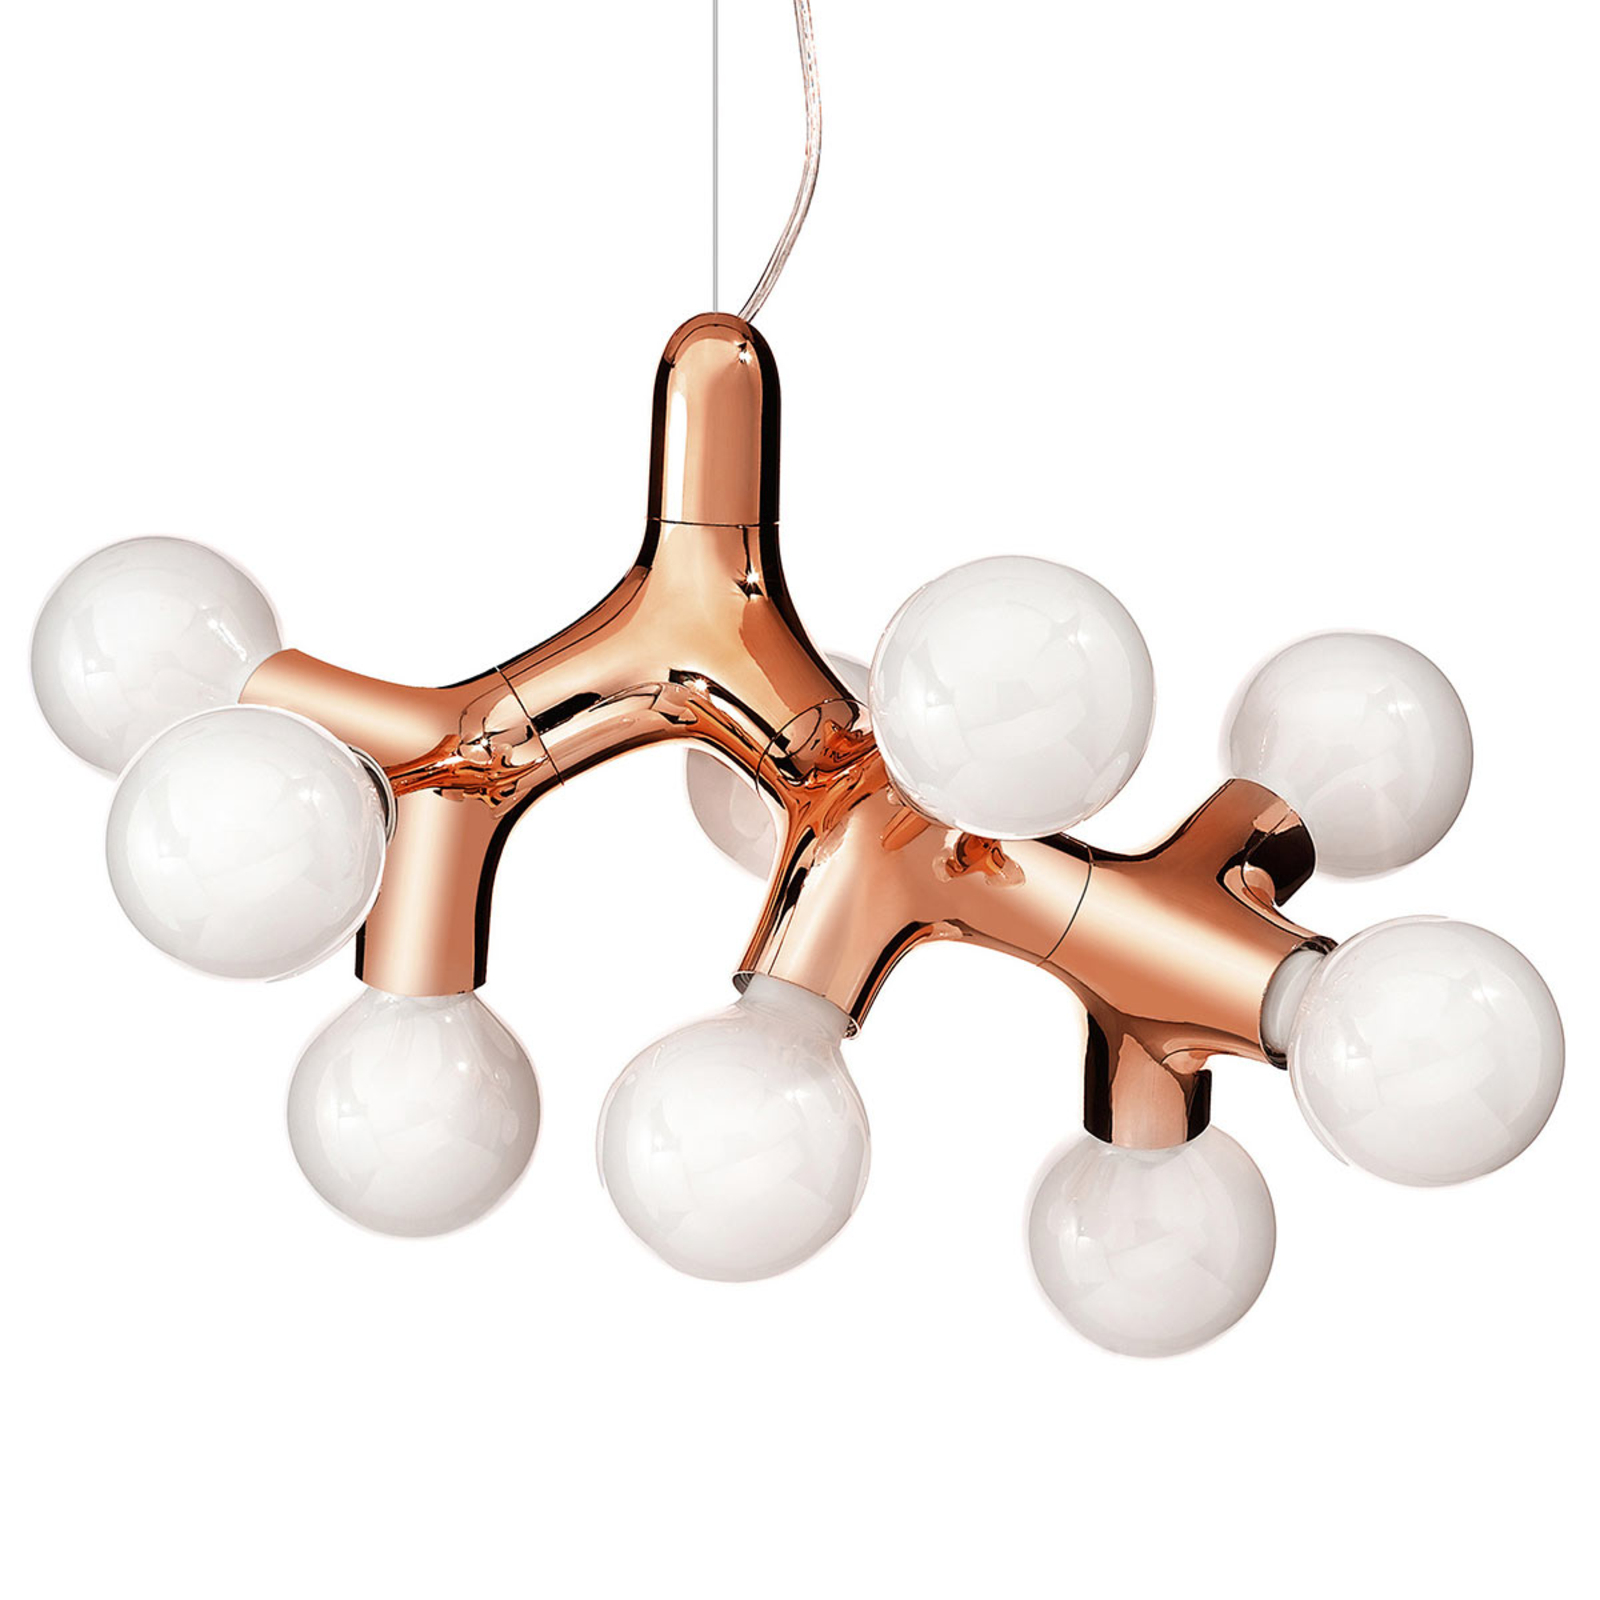 next DNA 0,1,2 - Designer pendant light, copper